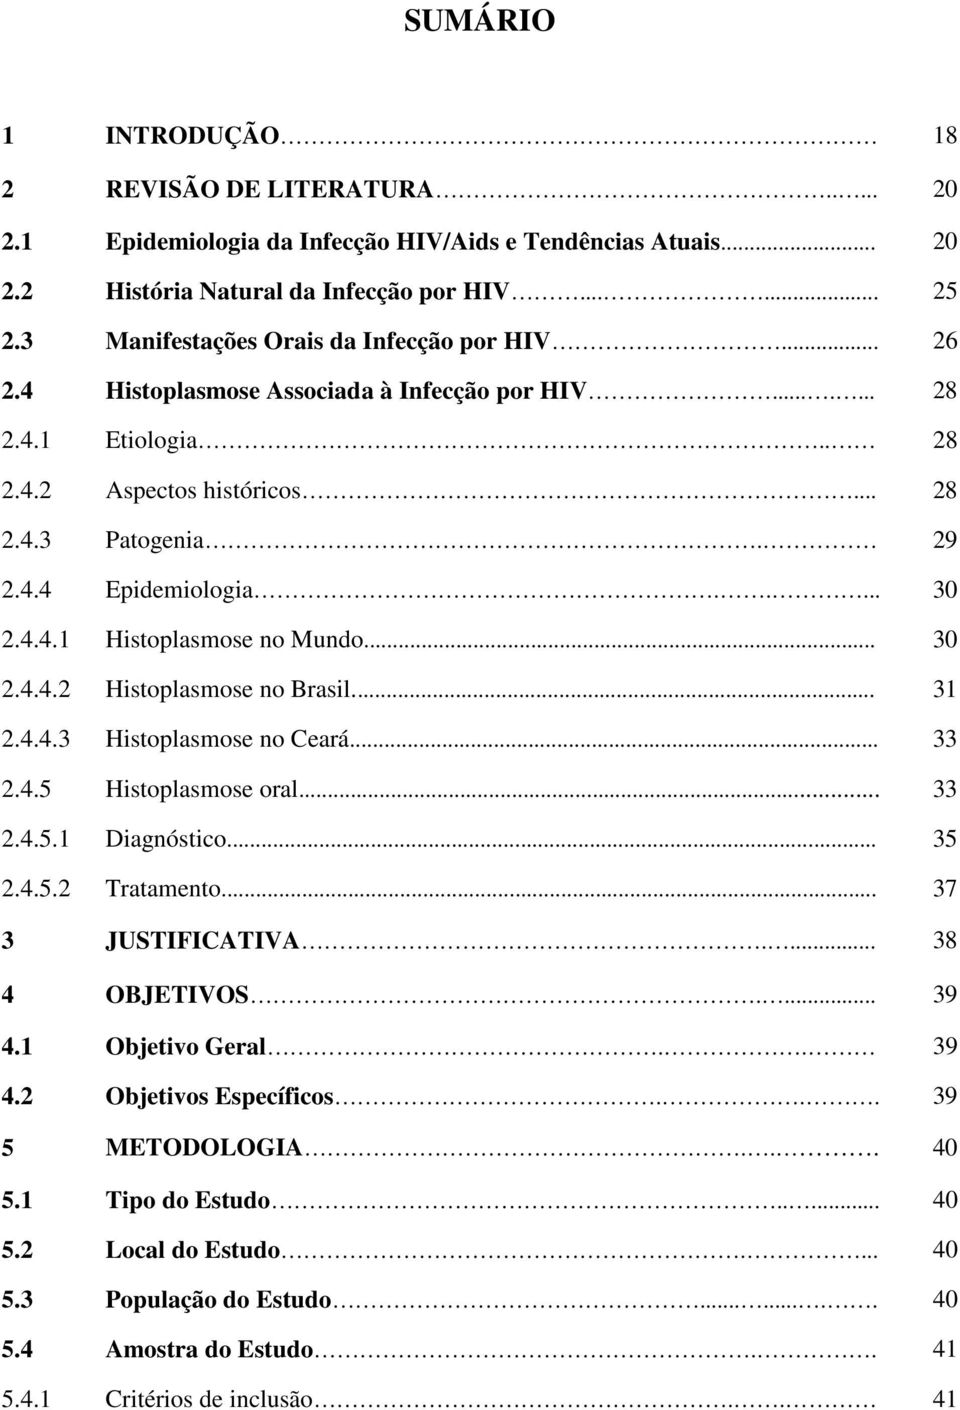 .... 30 2.4.4.1 Histoplasmose no Mundo... 30 2.4.4.2 Histoplasmose no Brasil... 31 2.4.4.3 Histoplasmose no Ceará... 33 2.4.5 Histoplasmose oral... 33 2.4.5.1 Diagnóstico... 35 2.4.5.2 Tratamento.